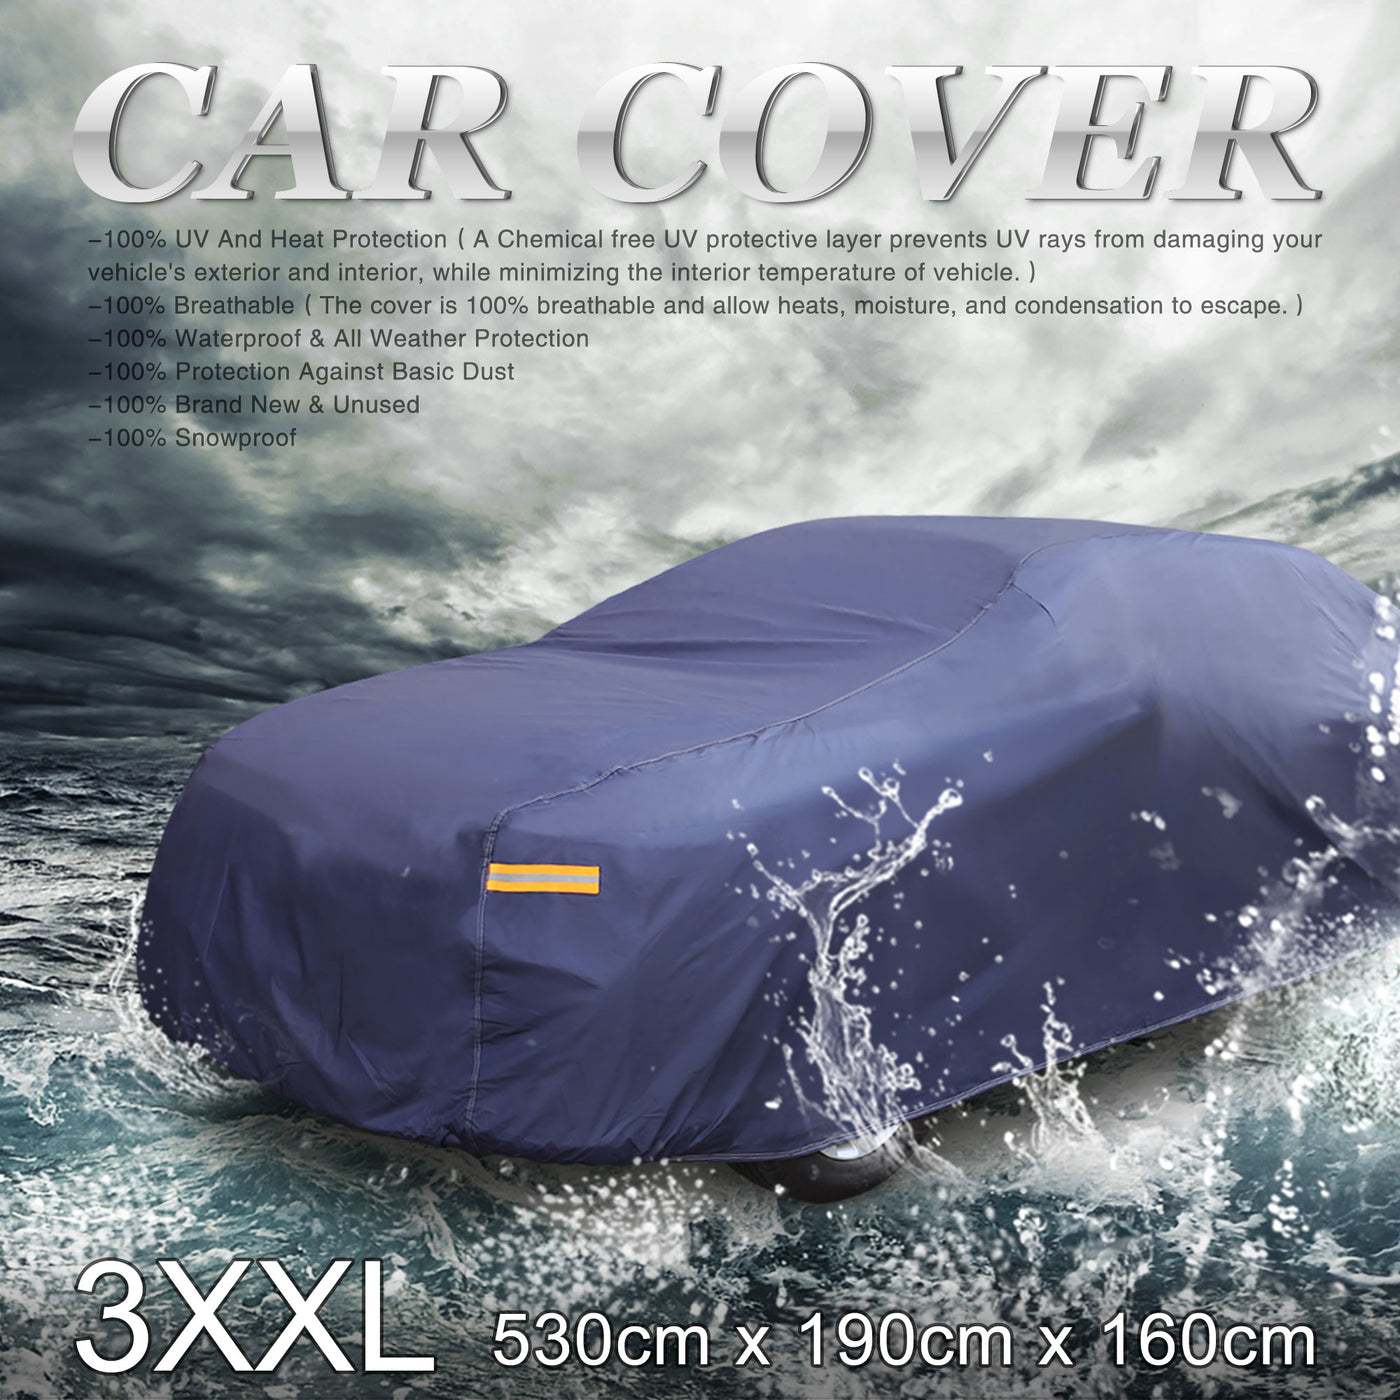 uxcell Uxcell 3L+ Purple Car Cover Rain Snow Sun Heat Resistant 480 x 180 x 160cm